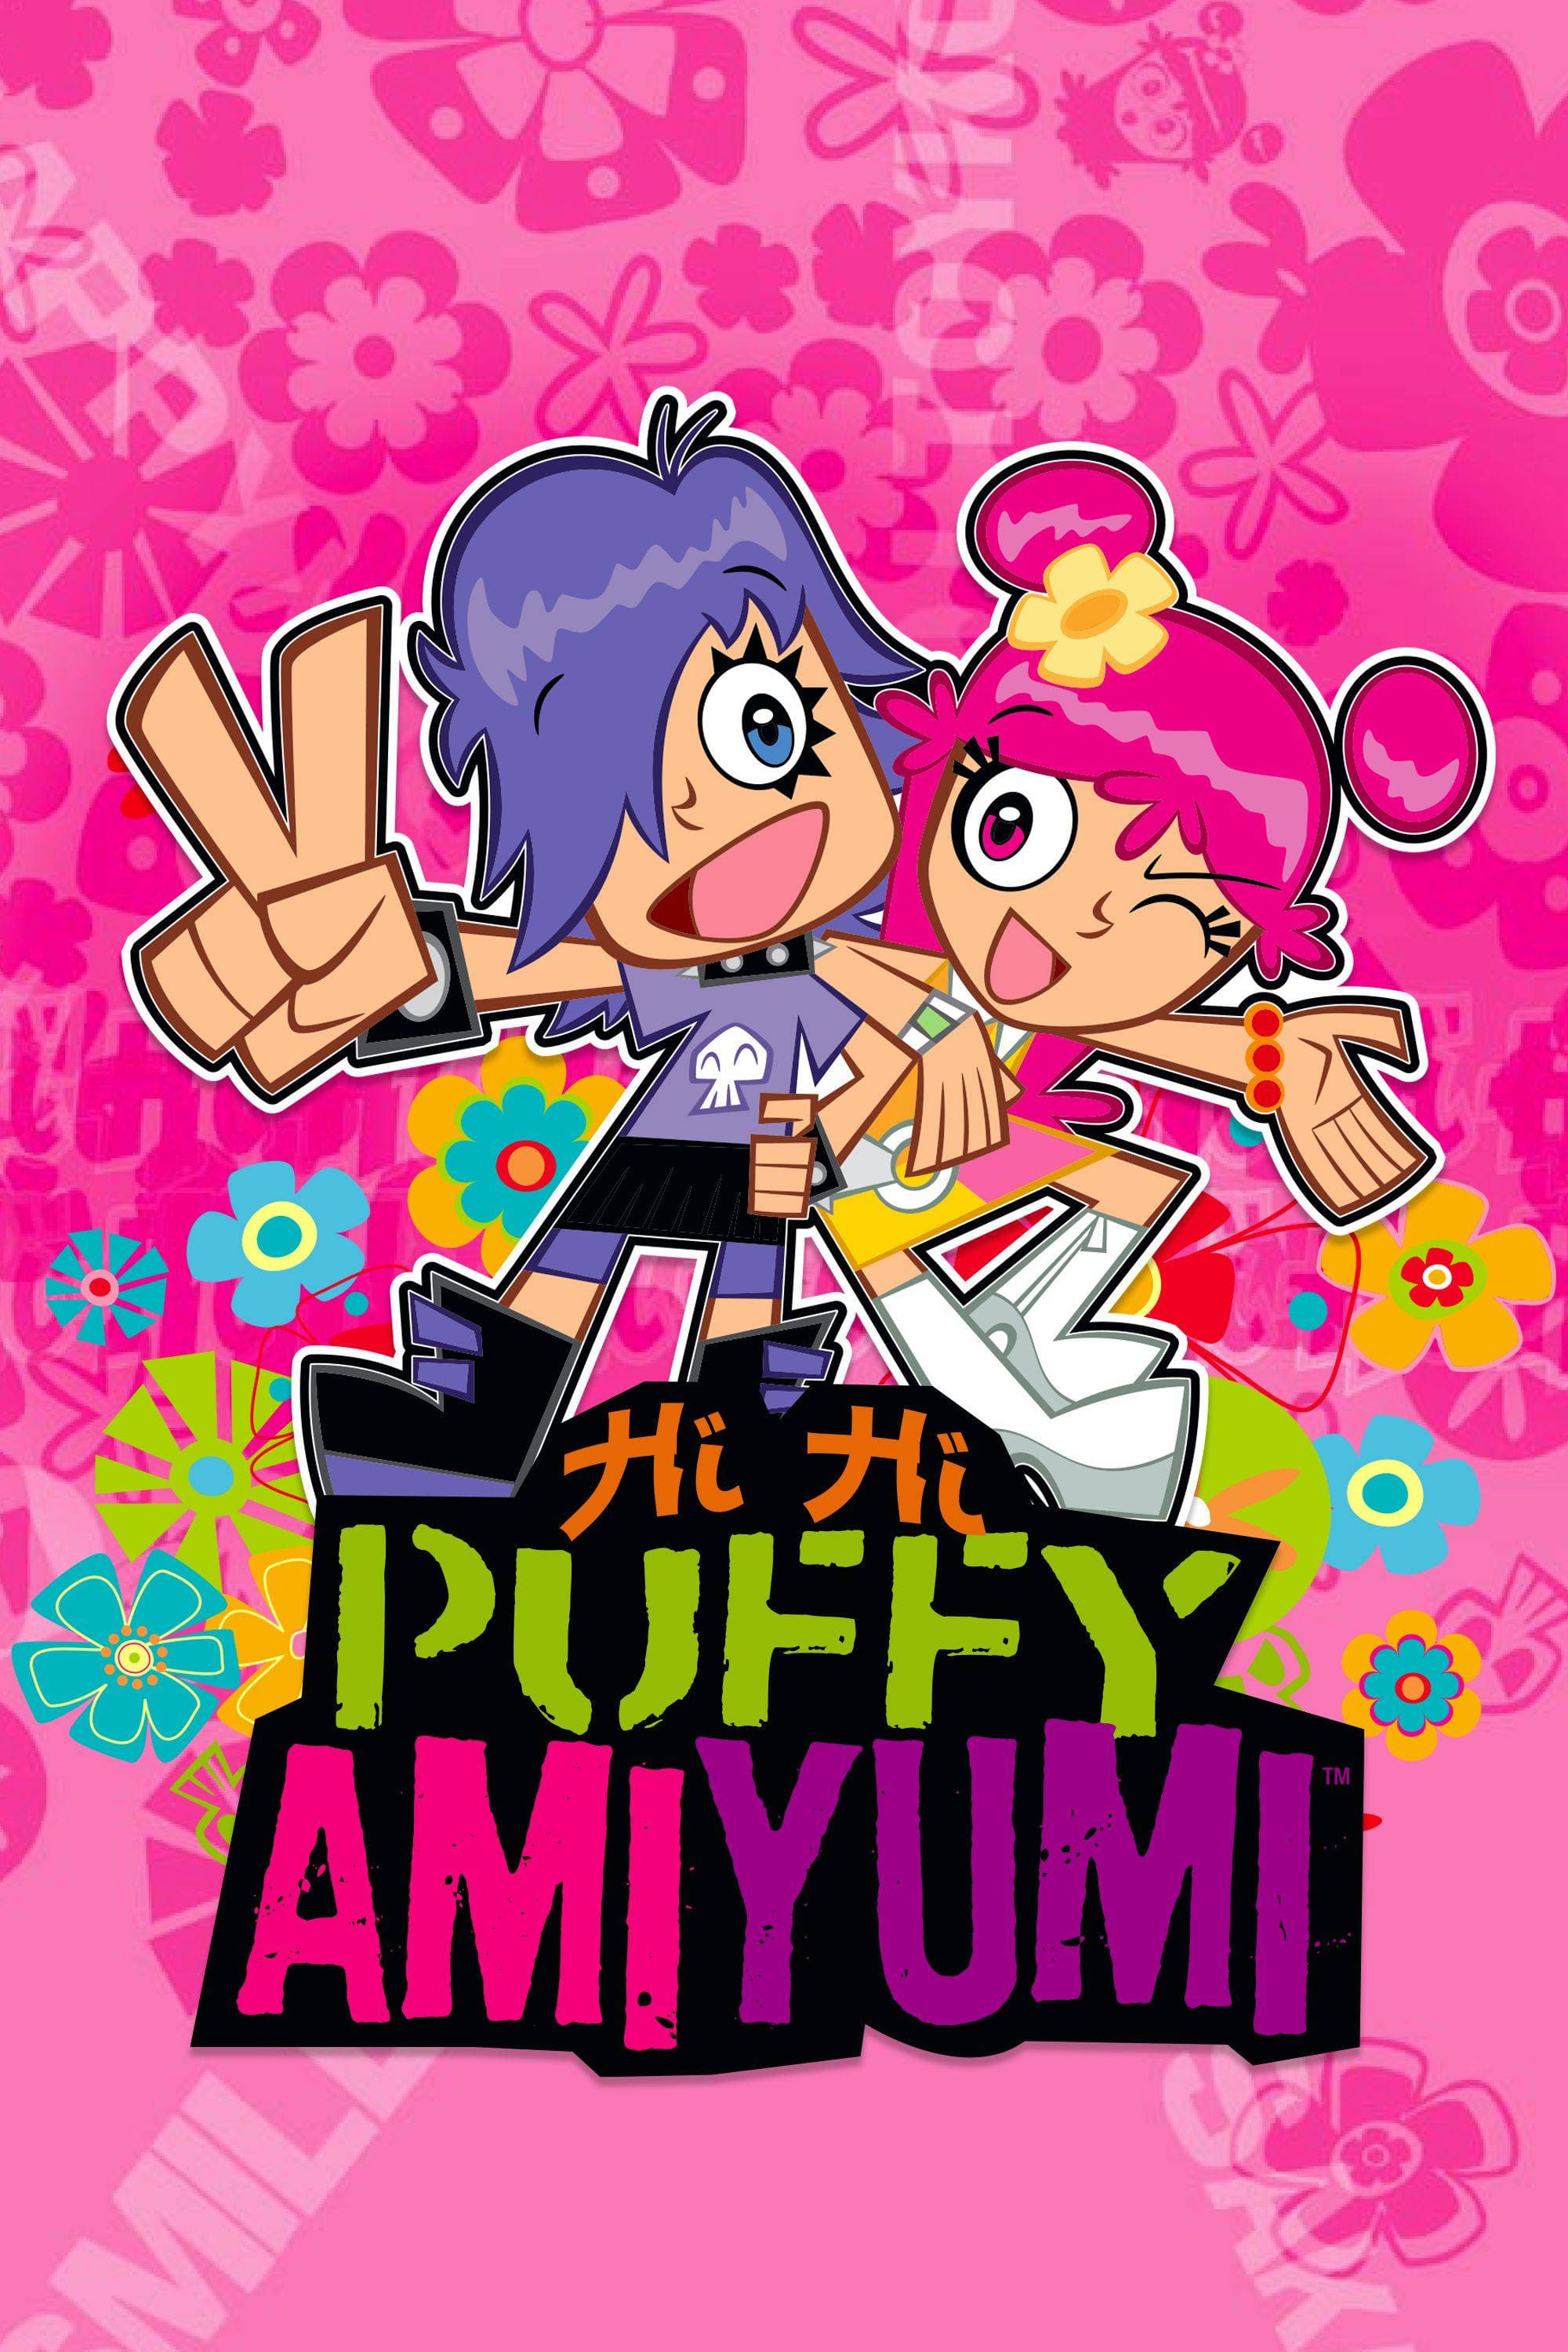 Hi Hi Puffy AmiYumi, The Dubbing Database